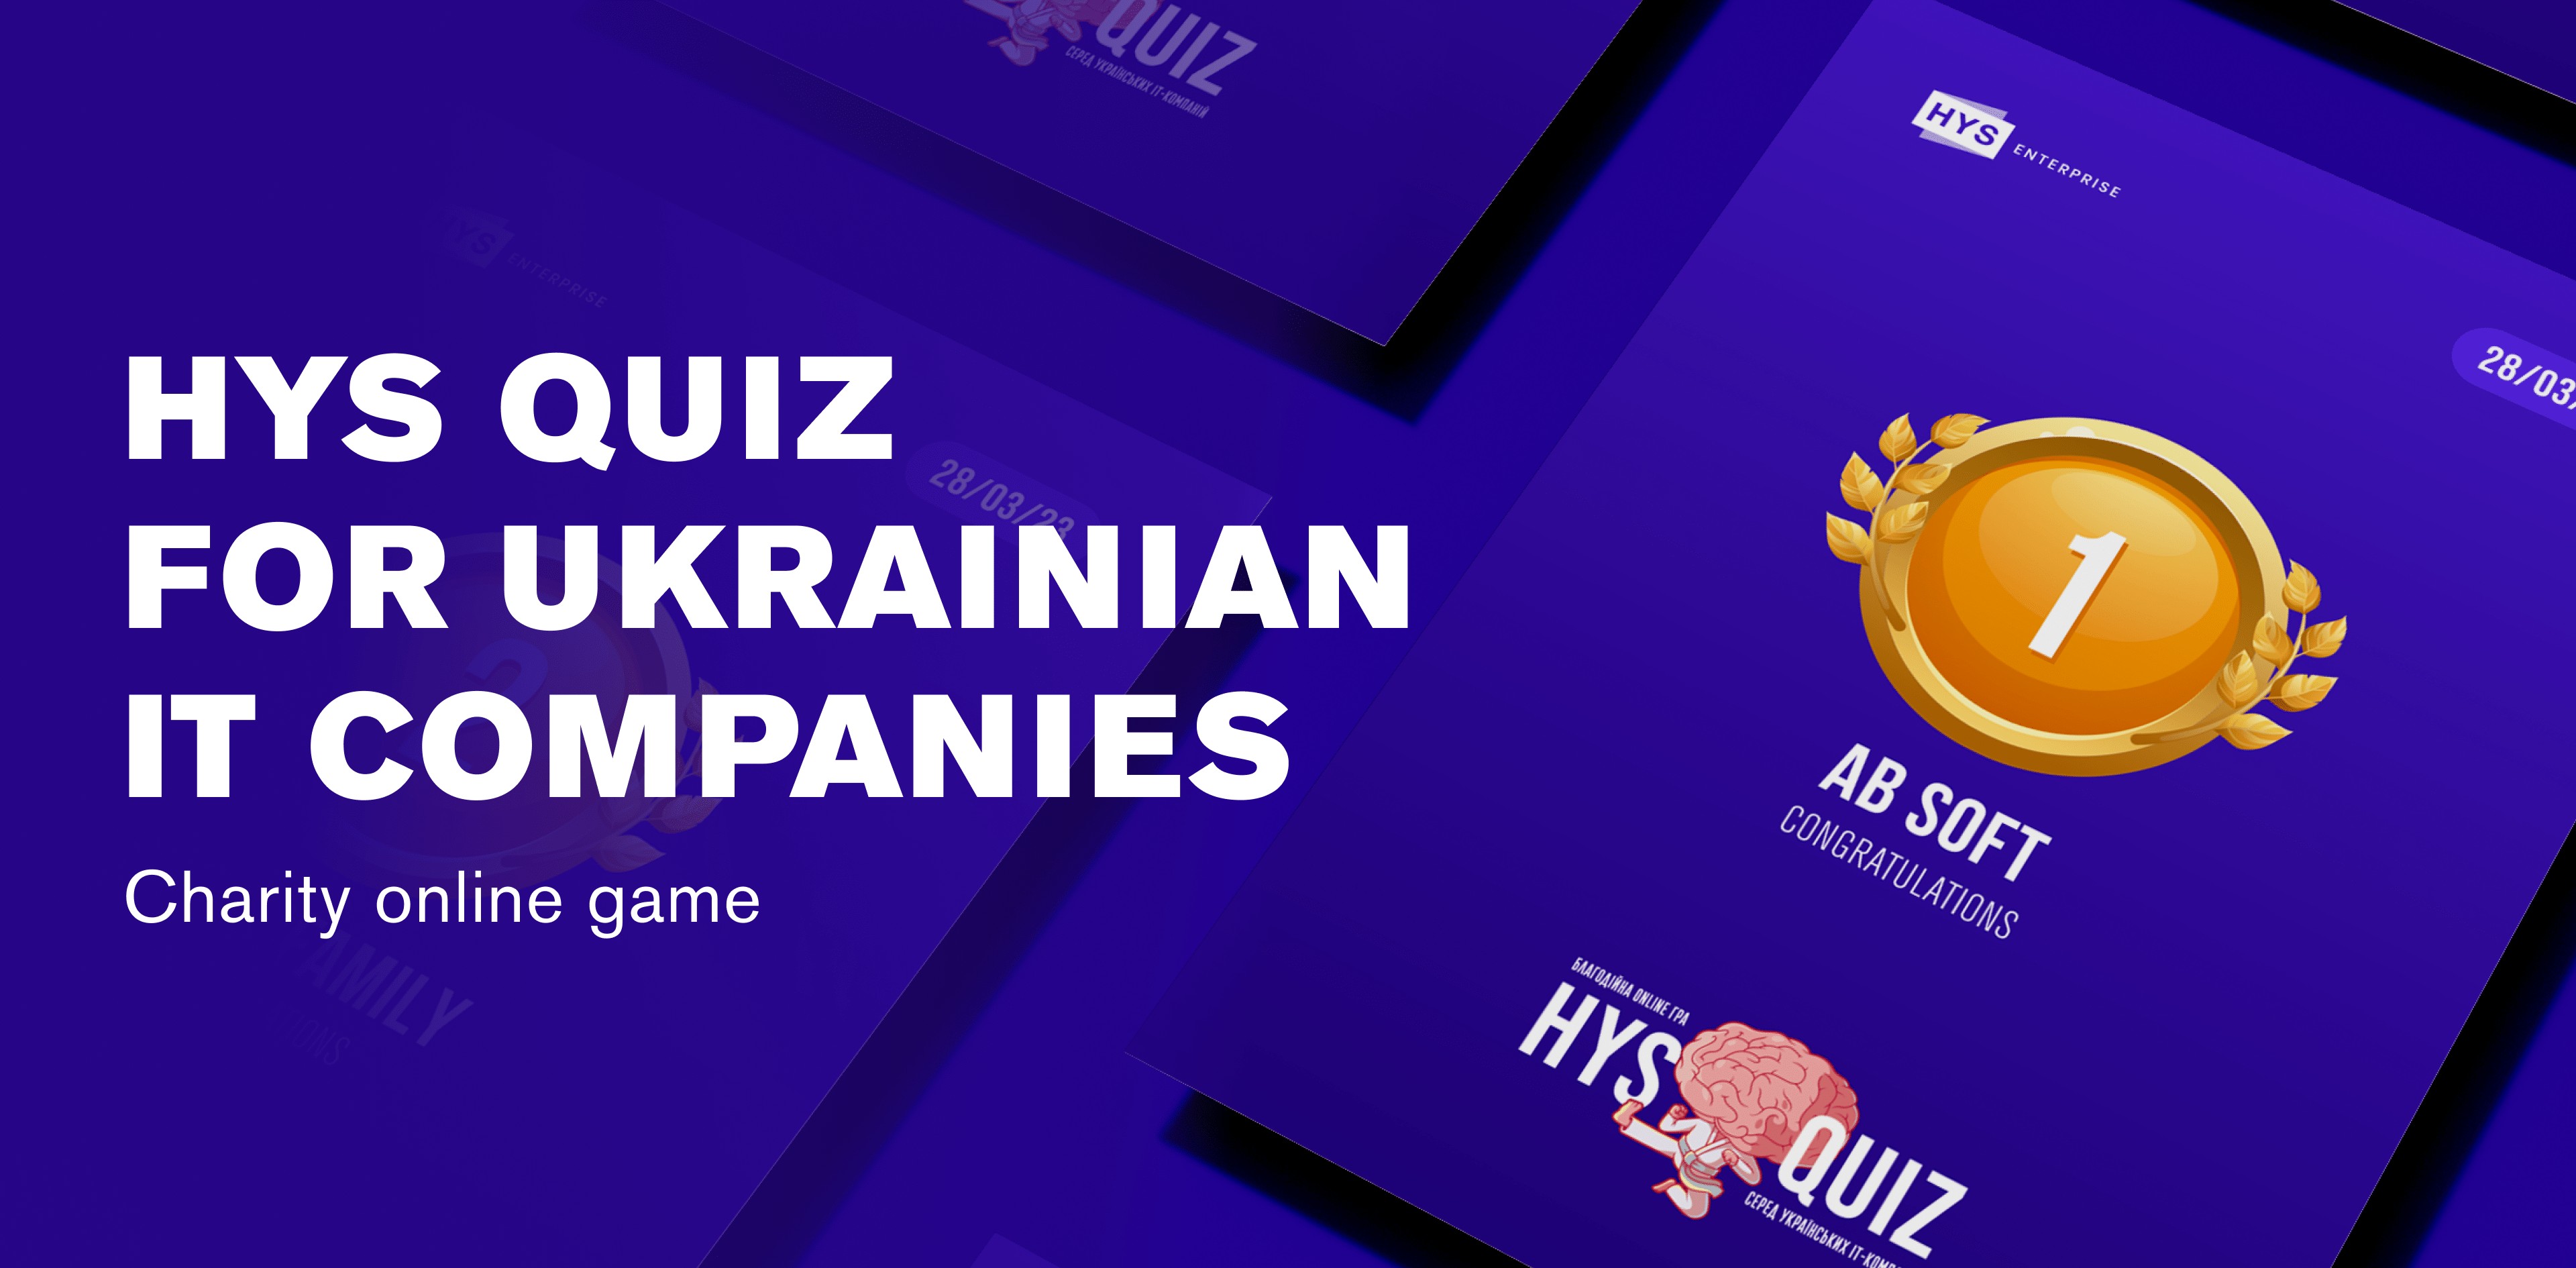 Charity QUIZ among Ukrainian IT companies